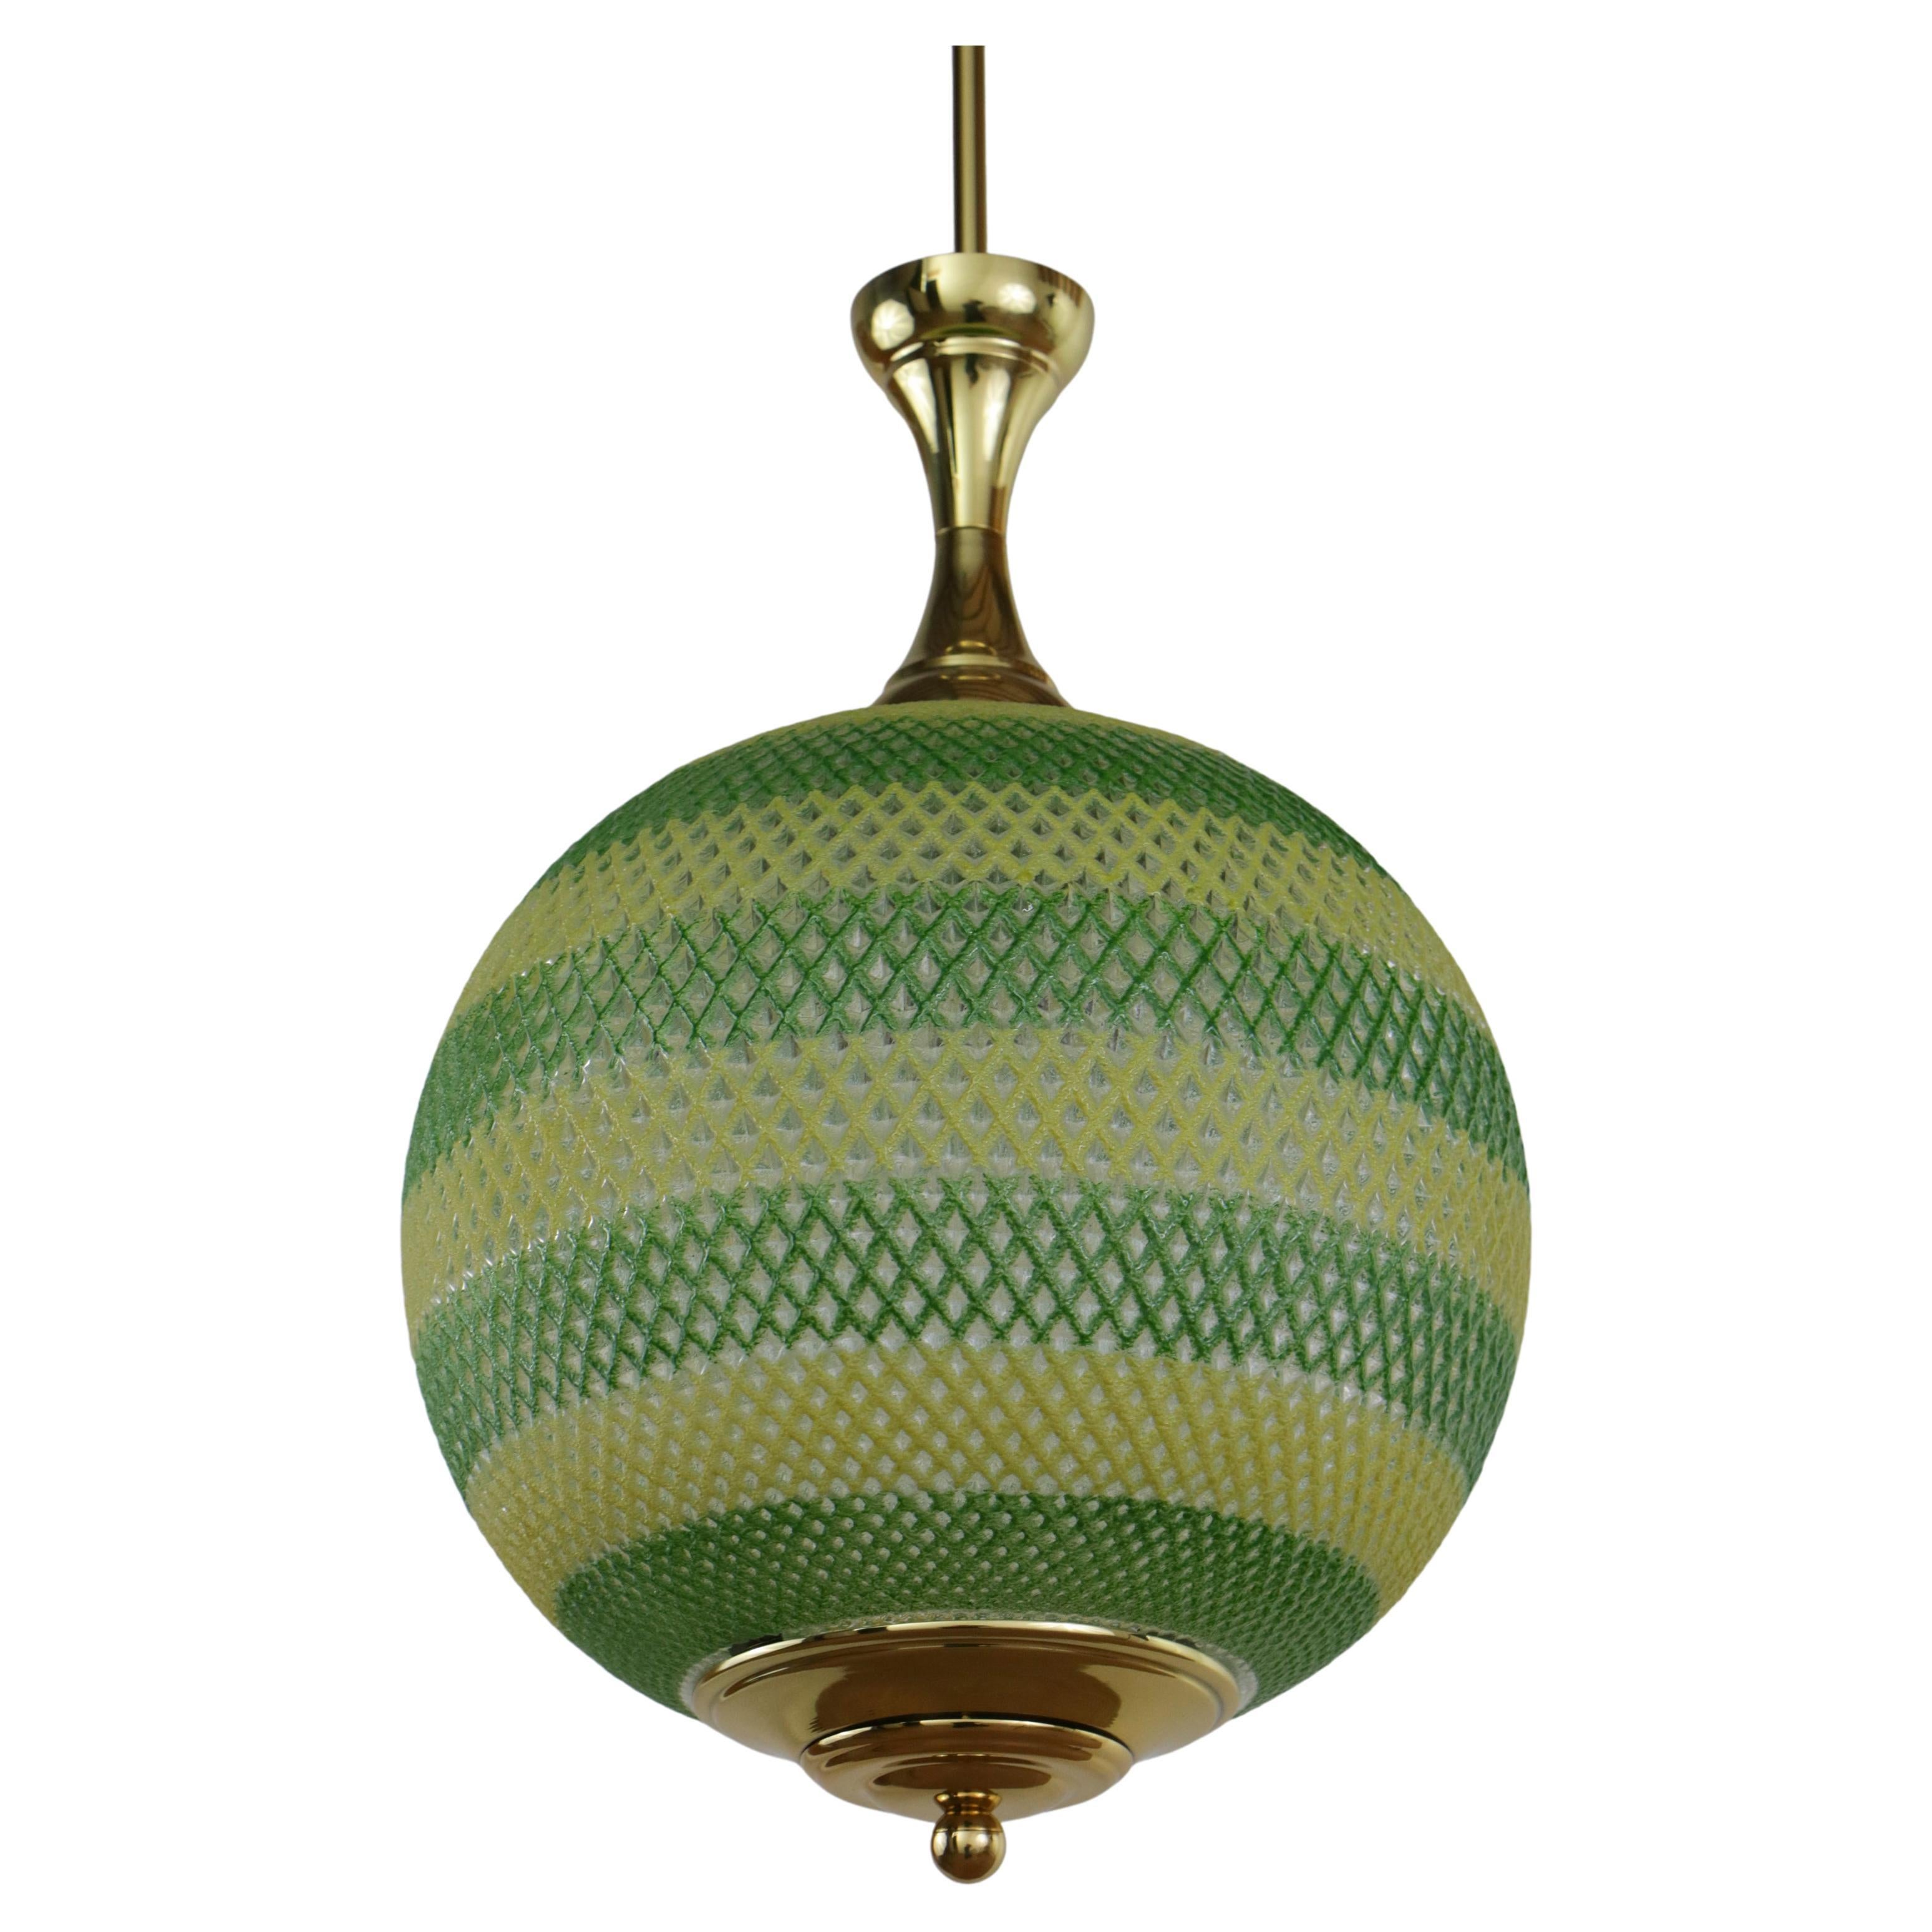 Italian Midcentury Green and Yellow Glass Pendant Lamp, 1960s